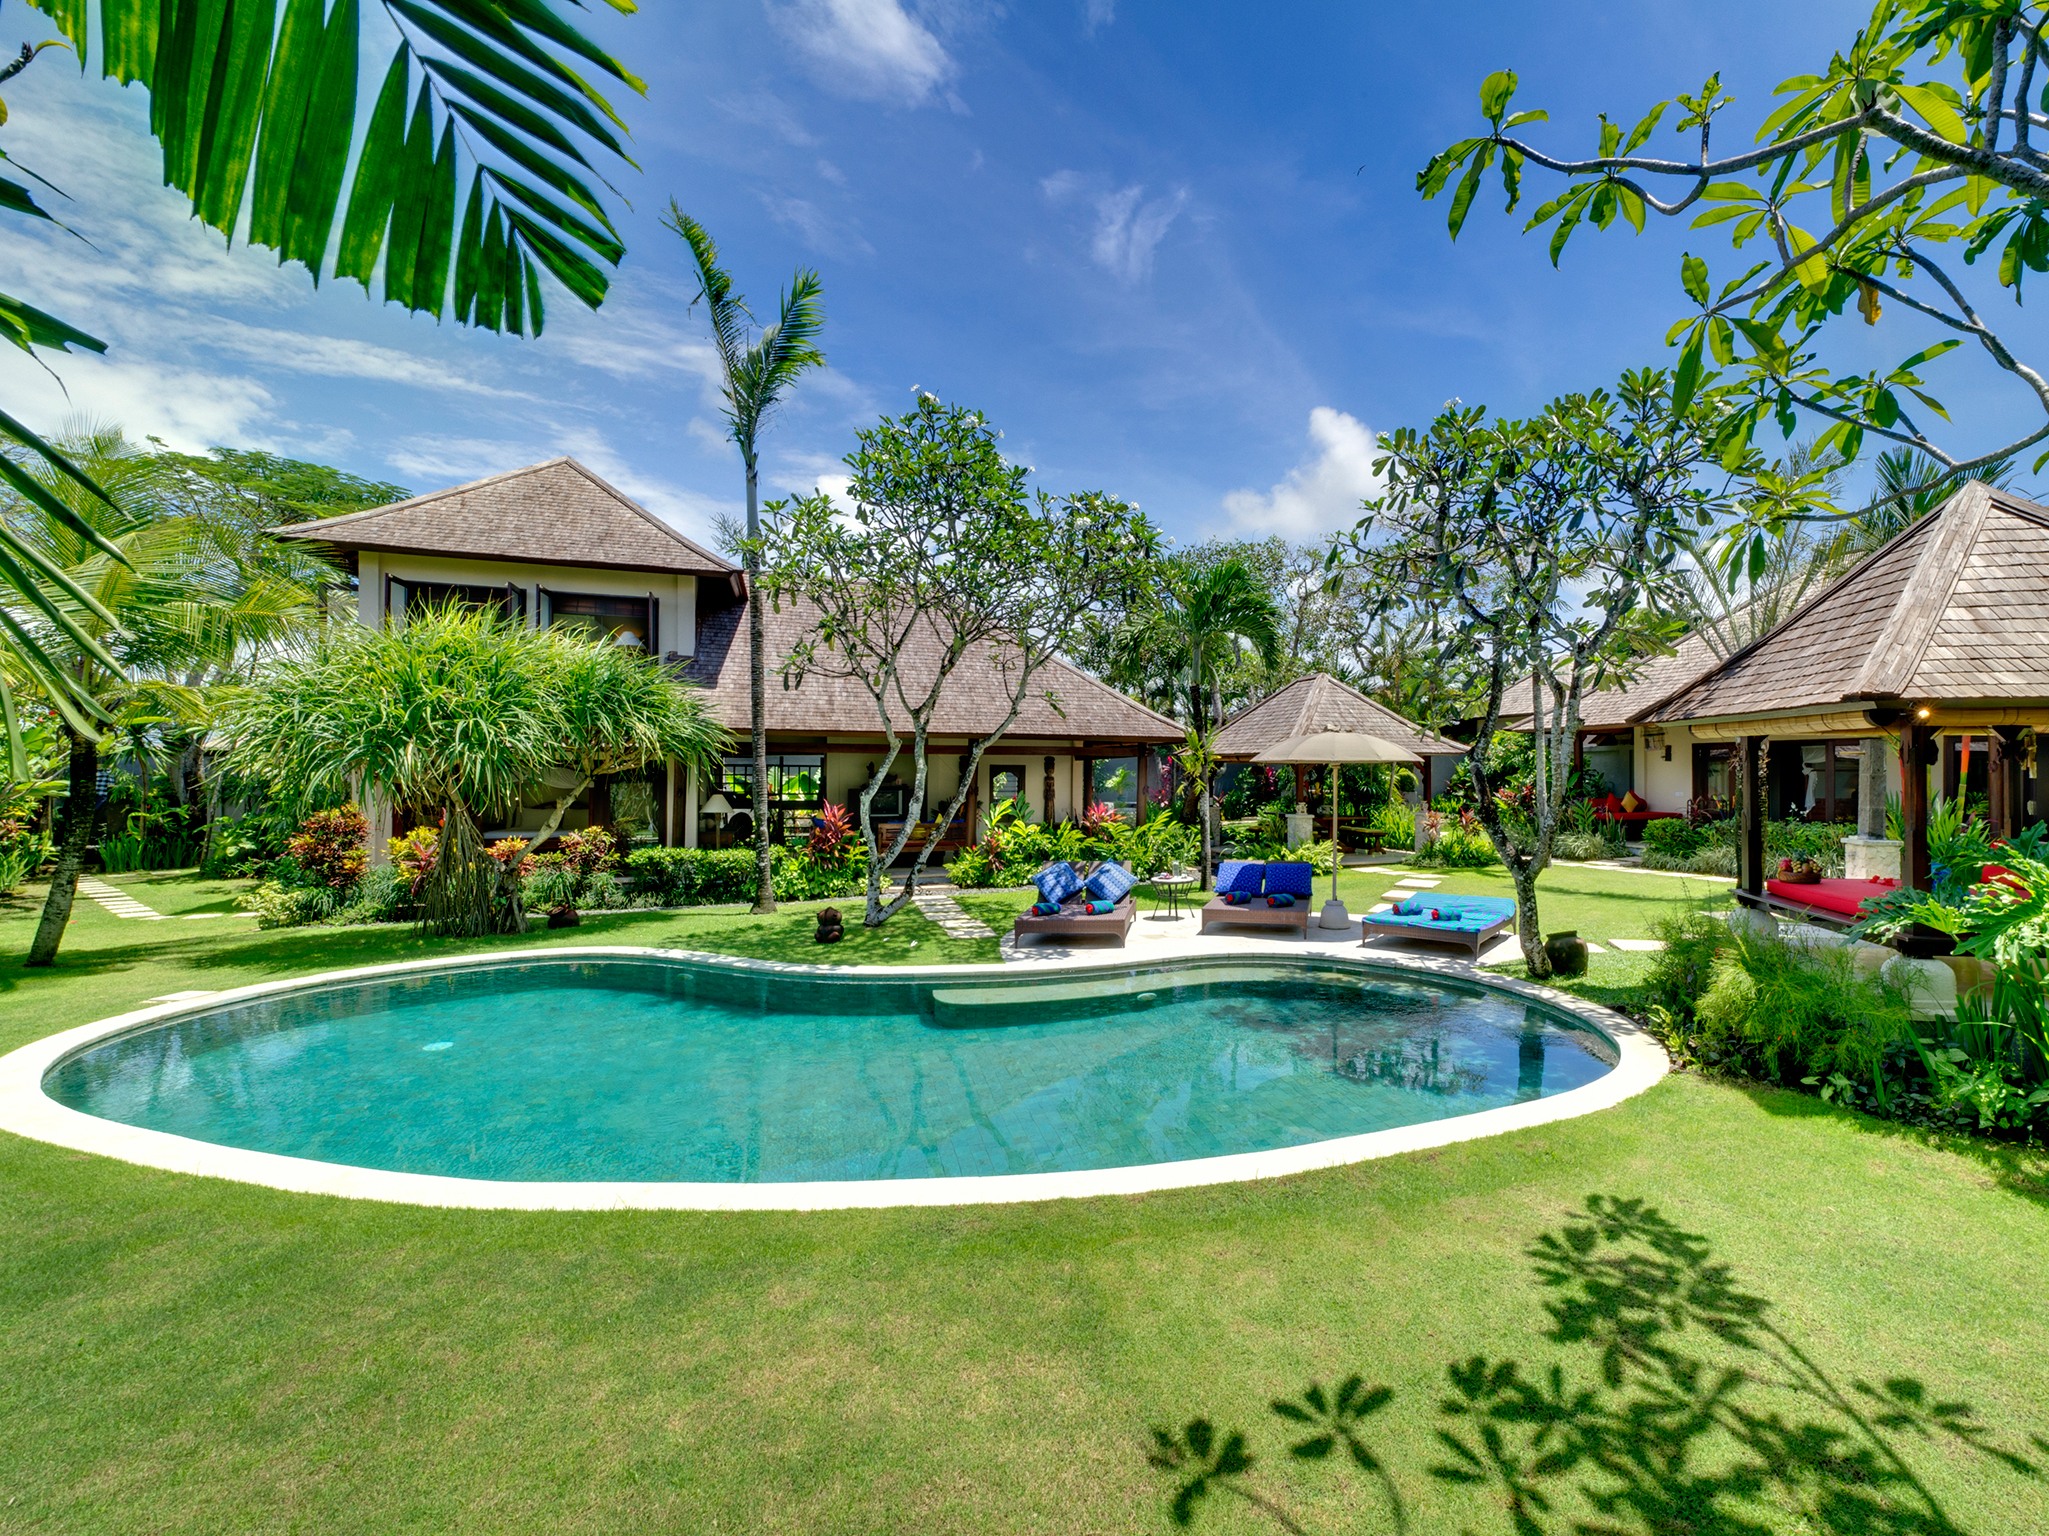 1. Villa Kakatua - Villa, pool and gardens - Villa Kakatua, Canggu, Bali